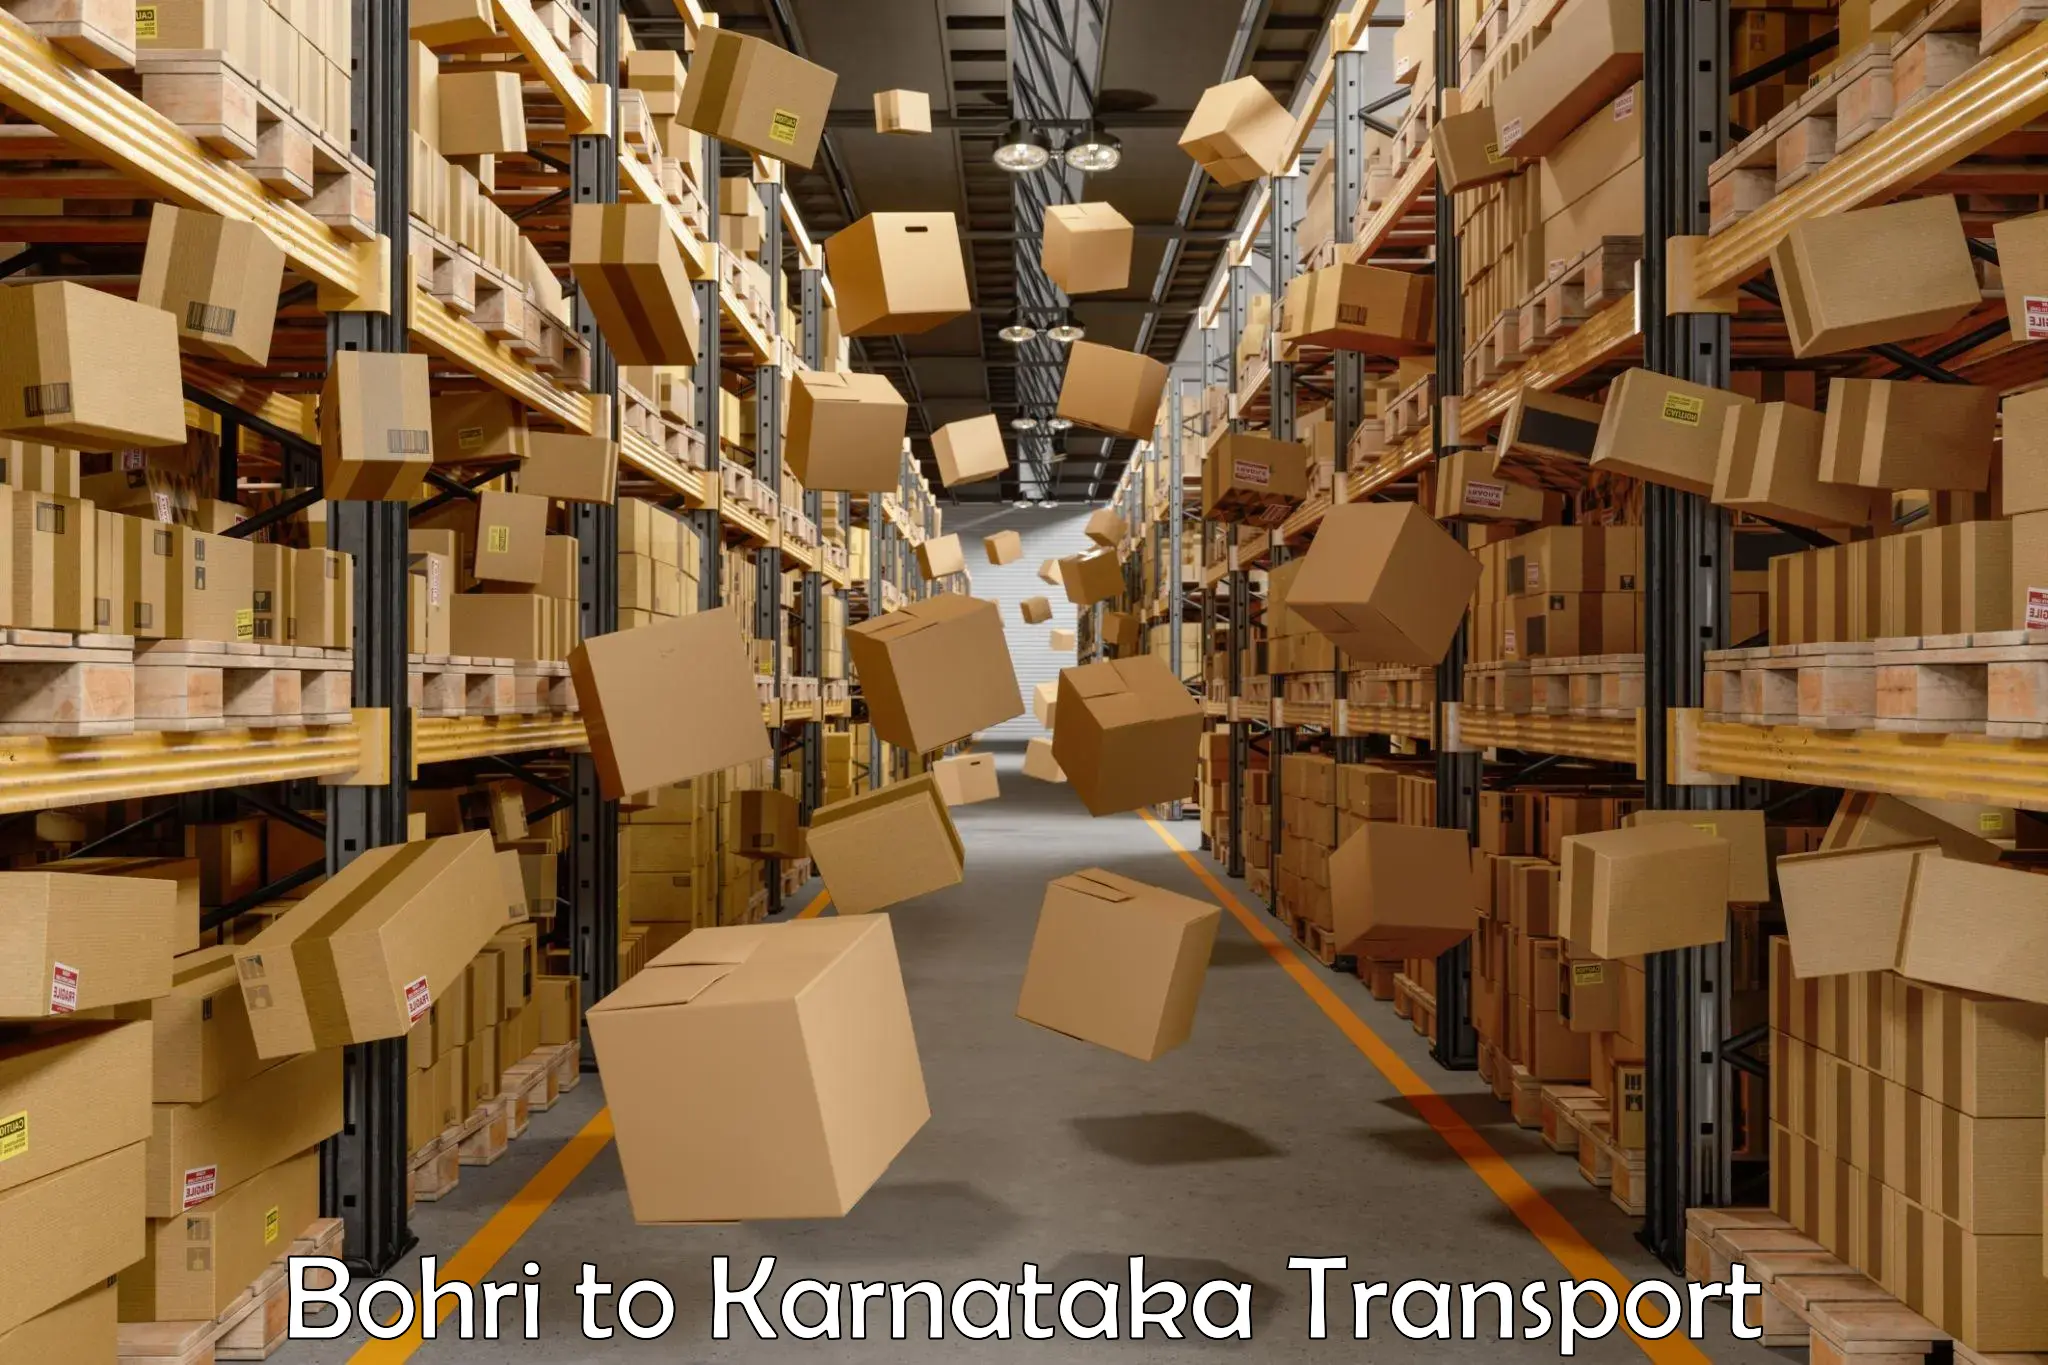 Truck transport companies in India Bohri to Karnataka